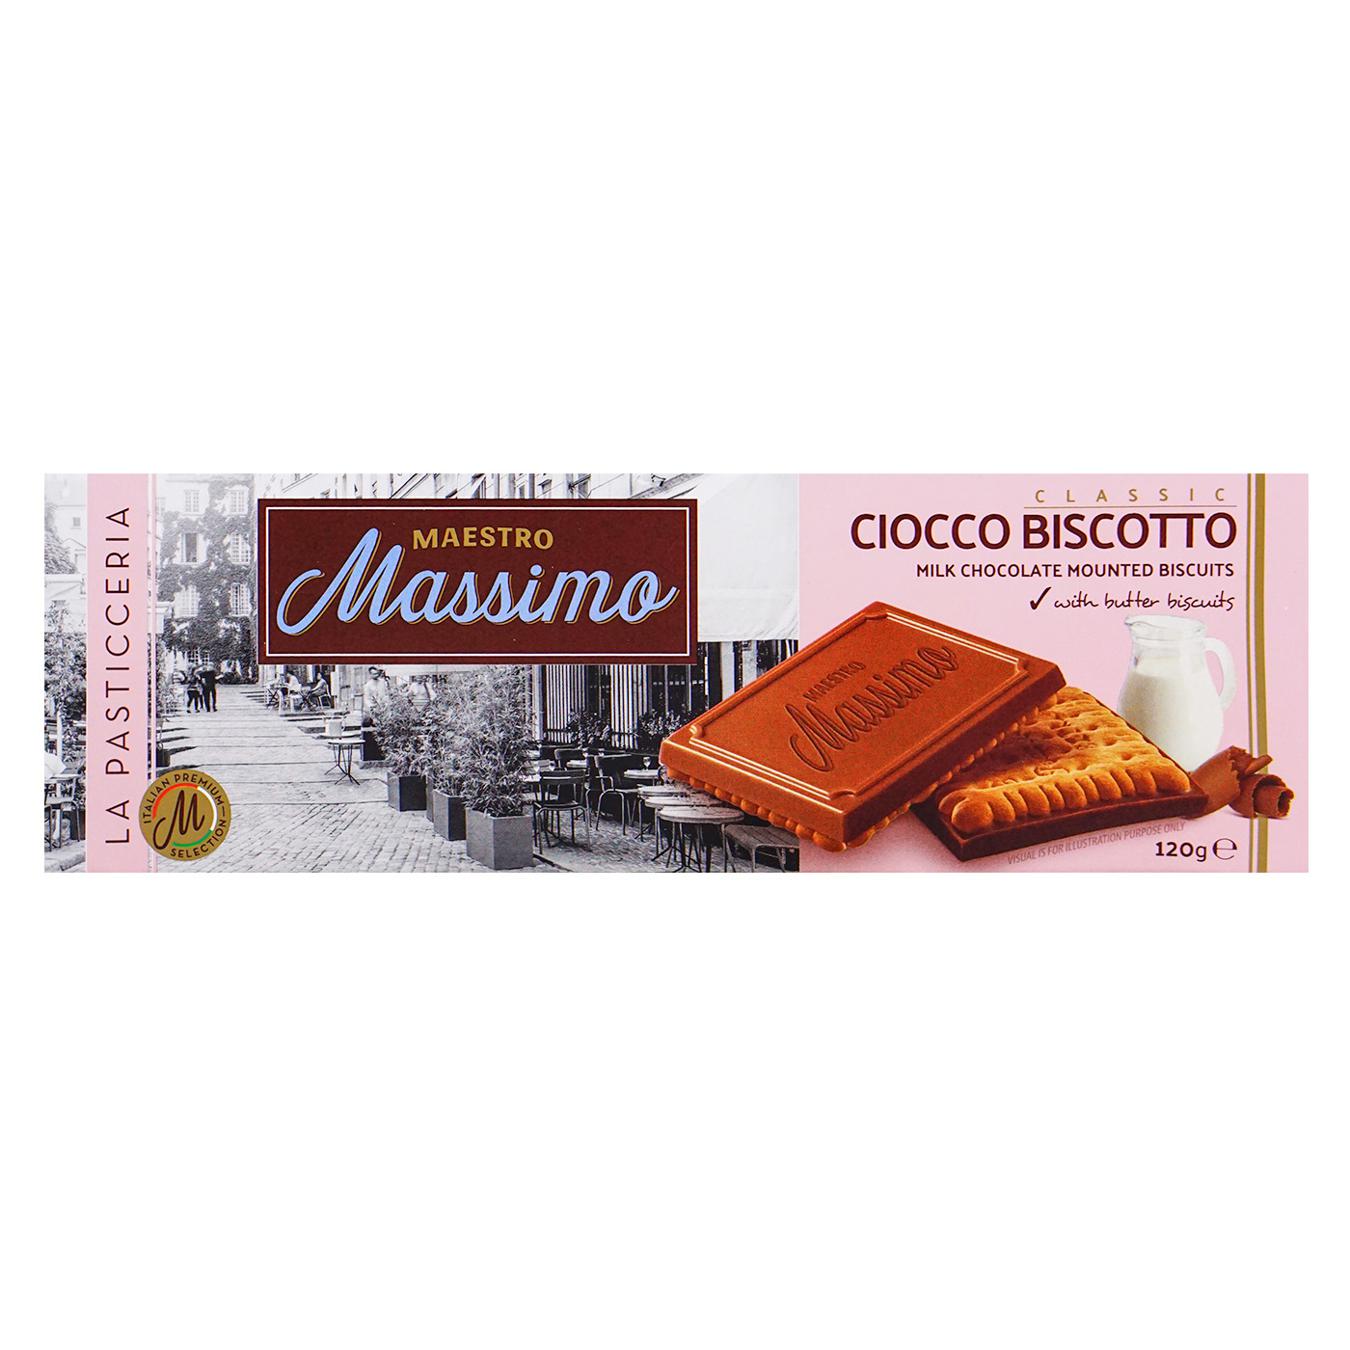 Maestro Massimo cookies with milk chocolate 120g